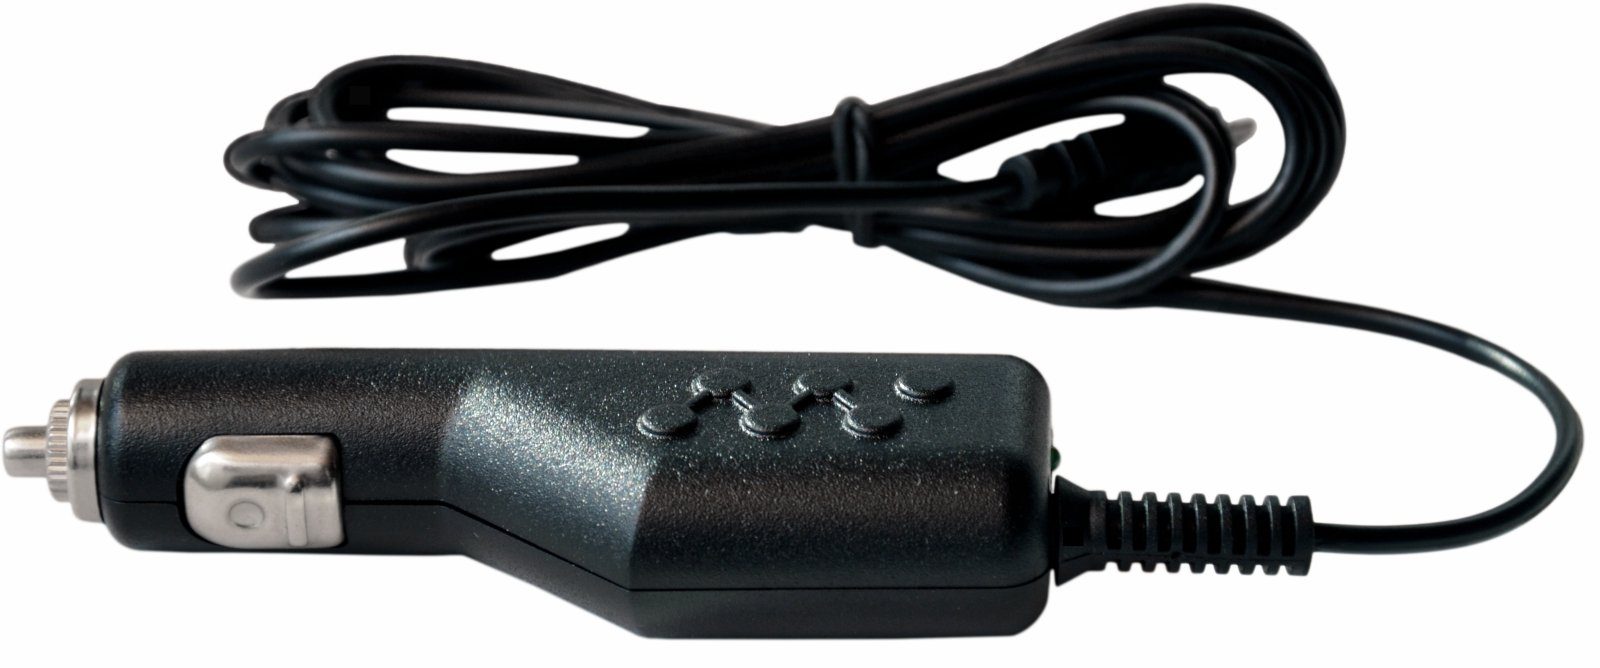 vhbw Autoladegerät Autoladekabel Ladekabel USB 12V